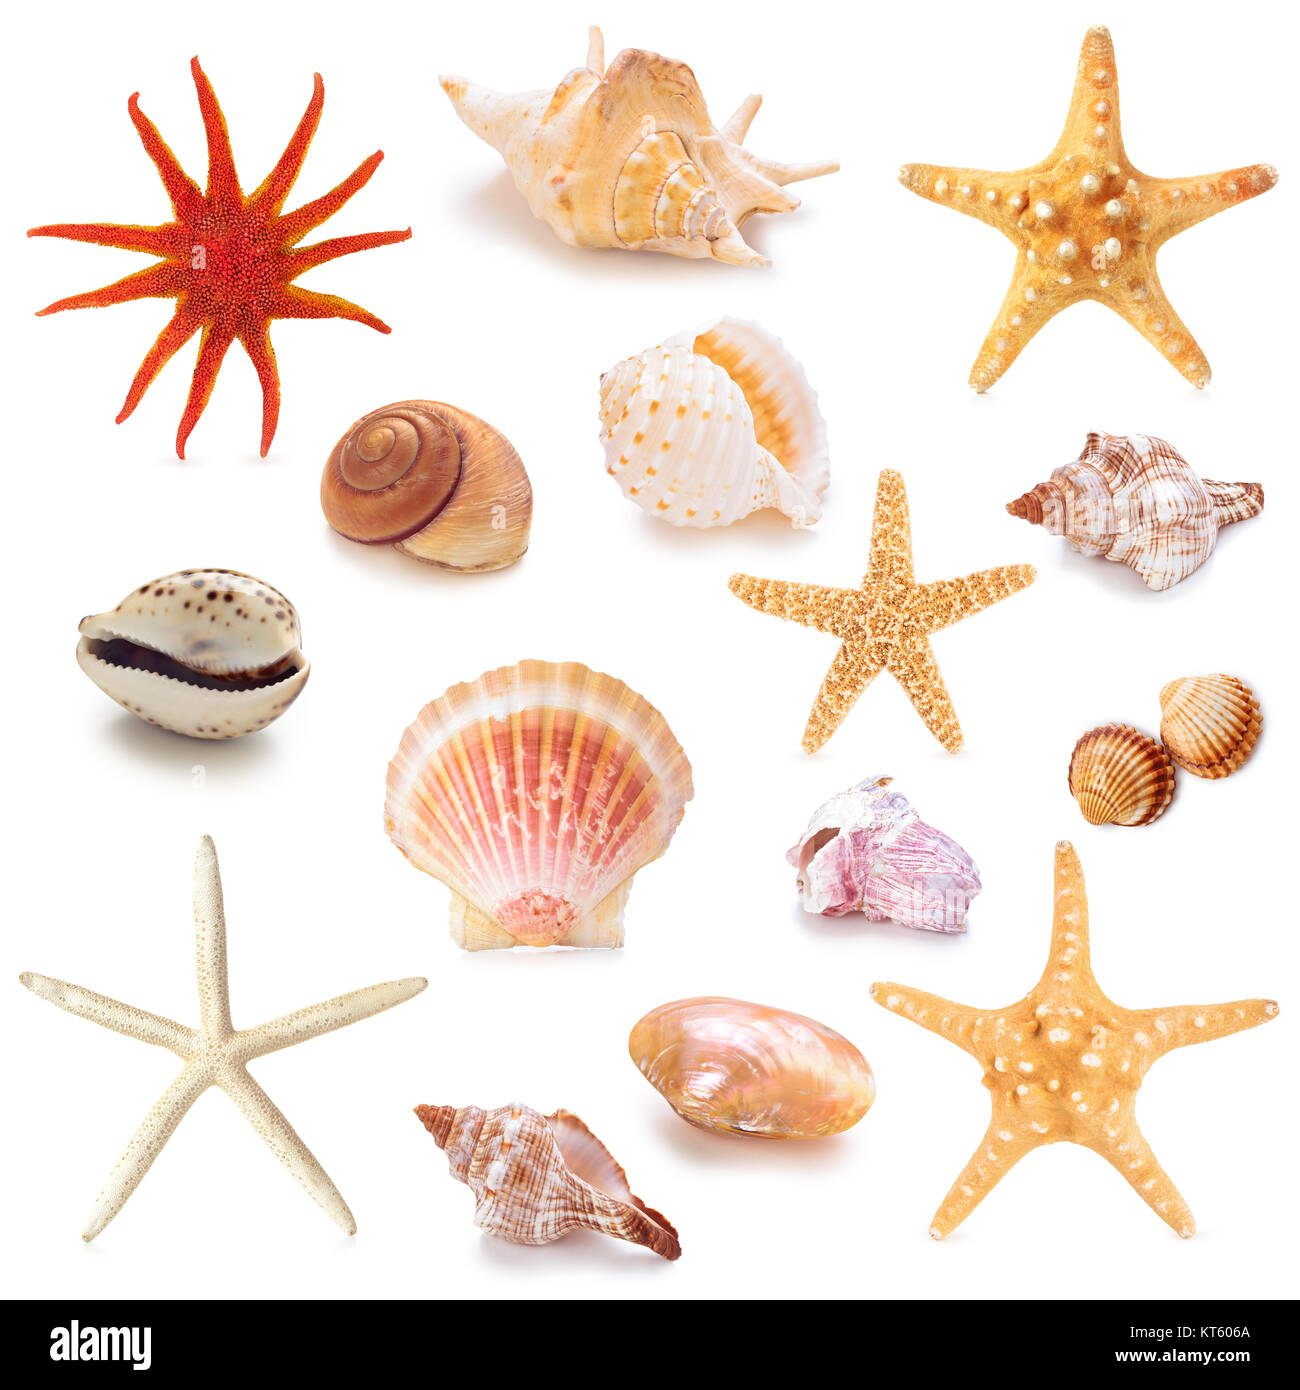 Collection of seashells. Stock Photo